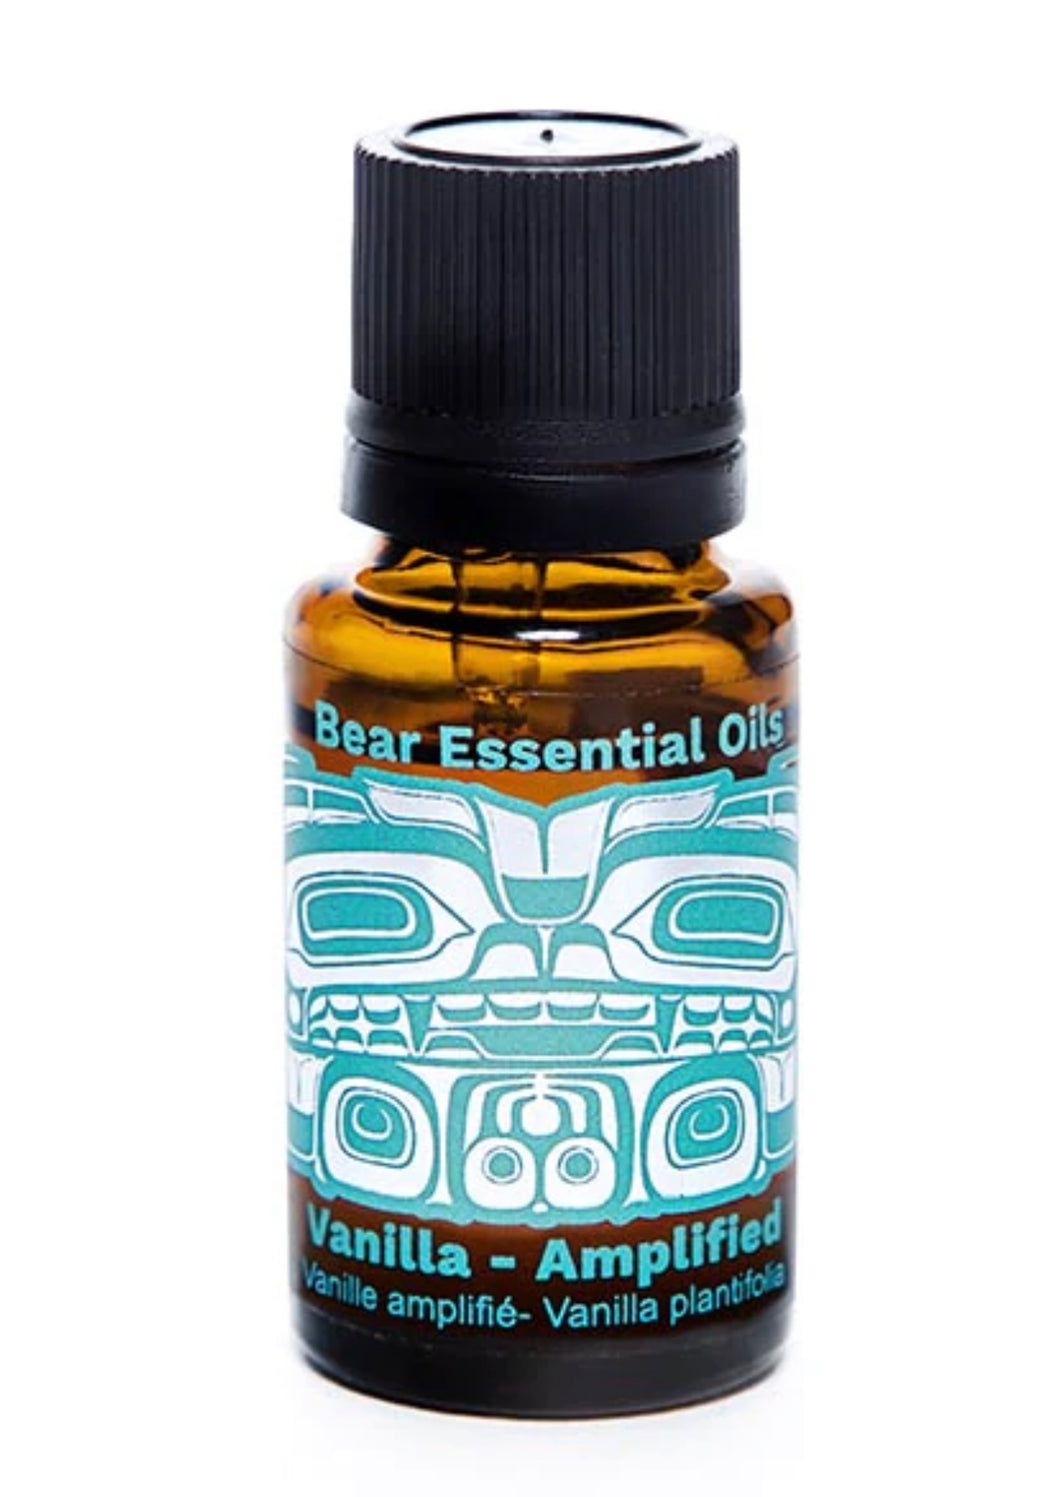 Bear Essential Oils - Vanilla Amplified